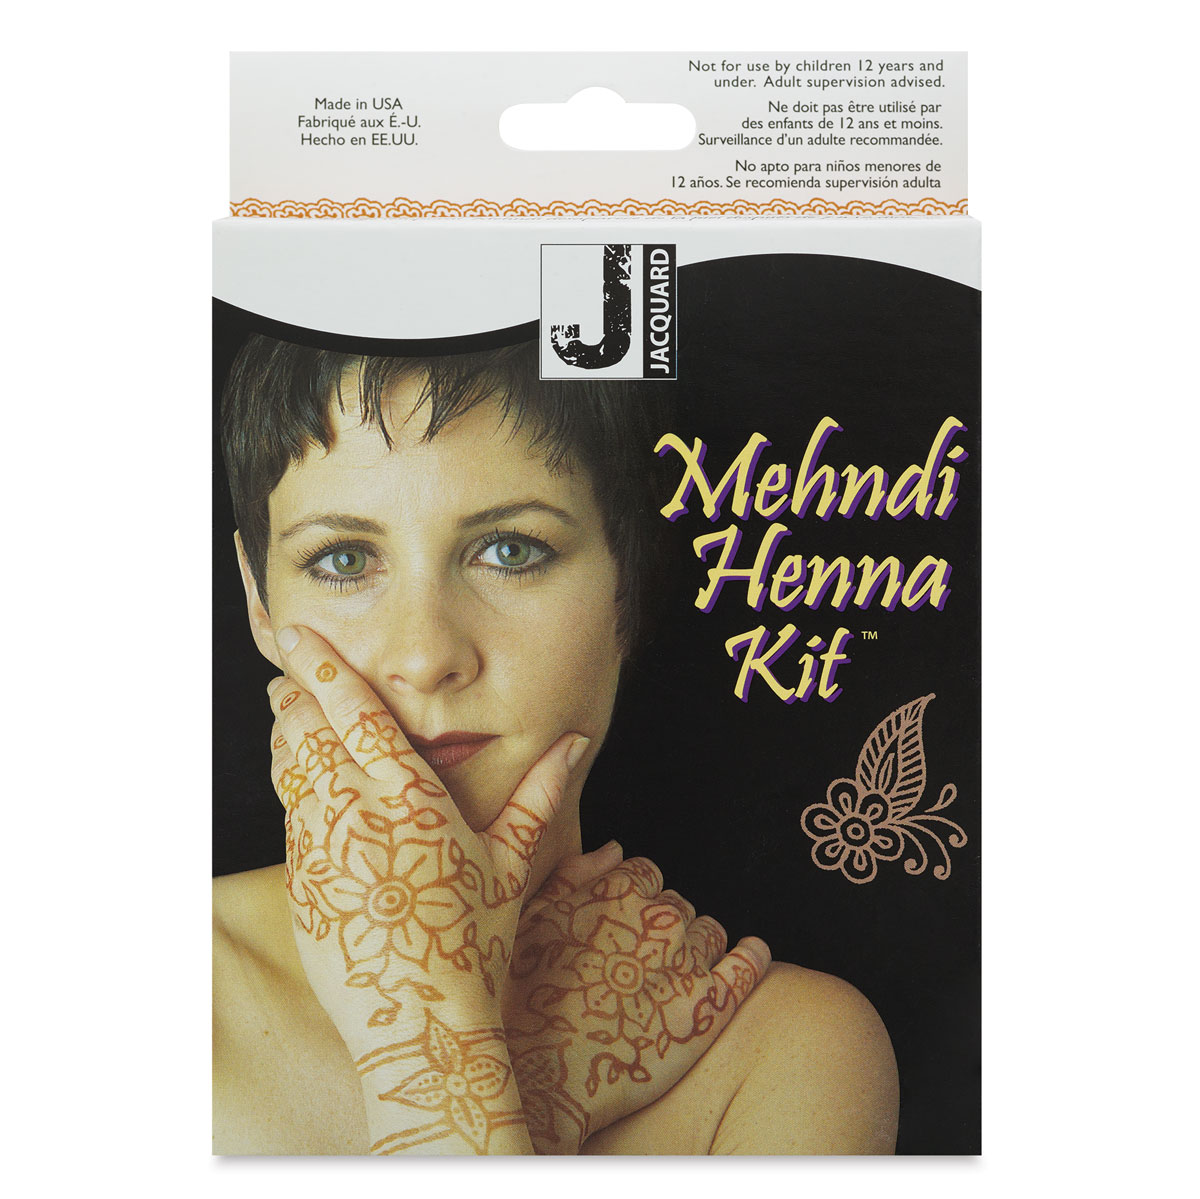 Jacquard Mehndi Henna Body Art Kit | BLICK Art Materials